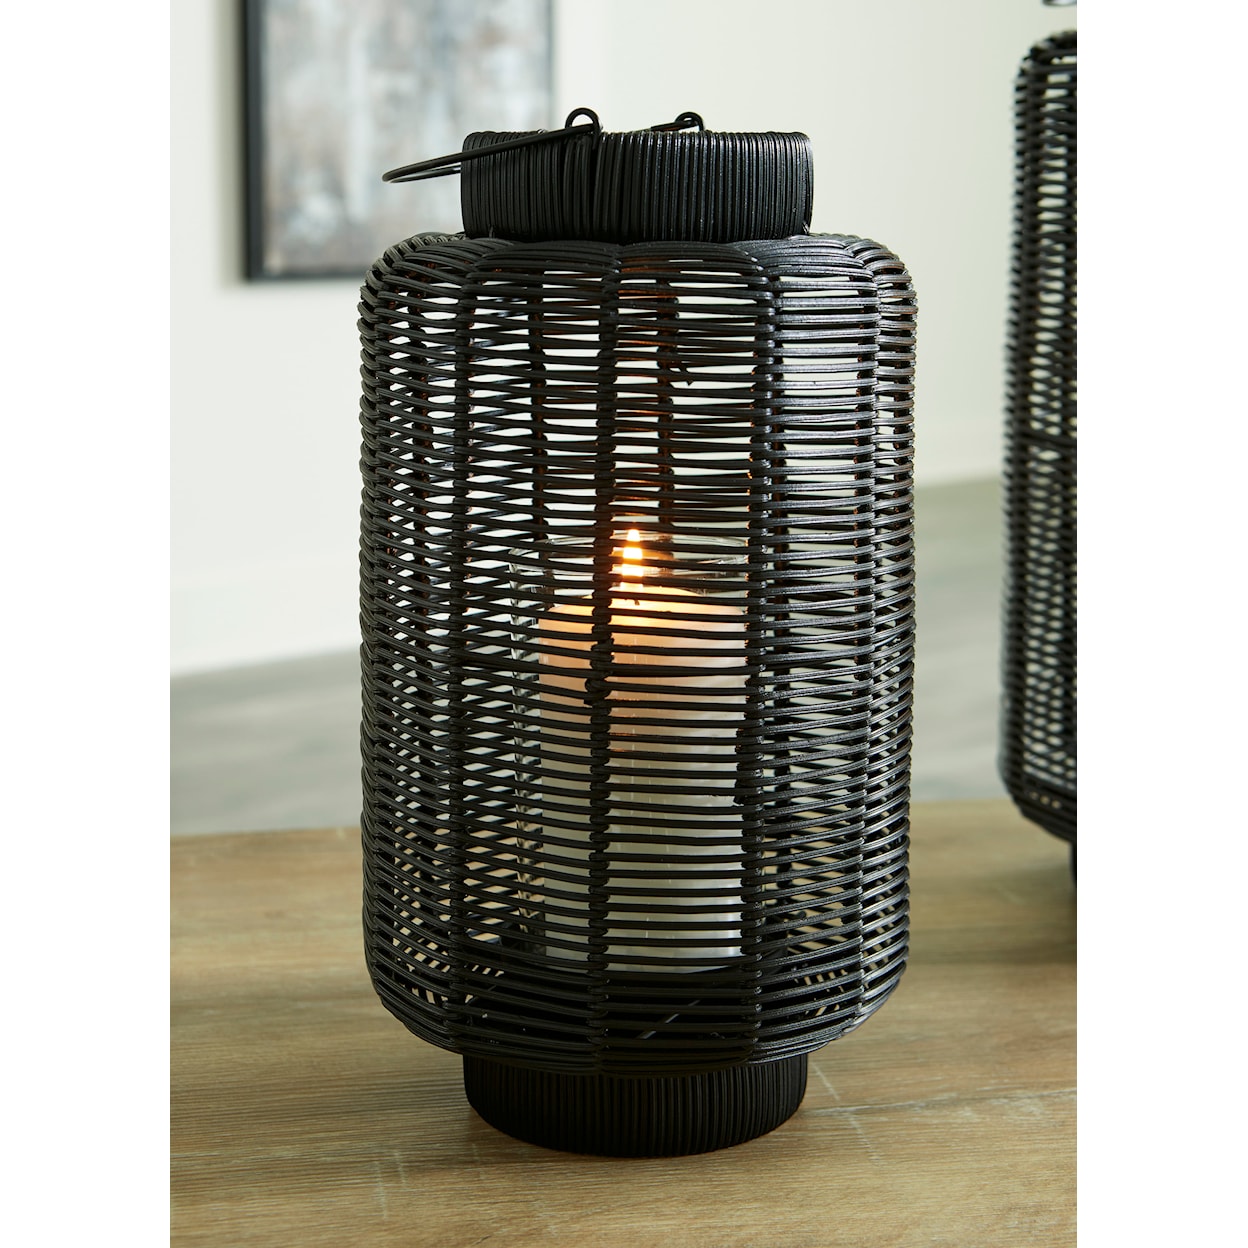 Ashley Furniture Signature Design Accents Indoor/Outdoor Evonne Lantern